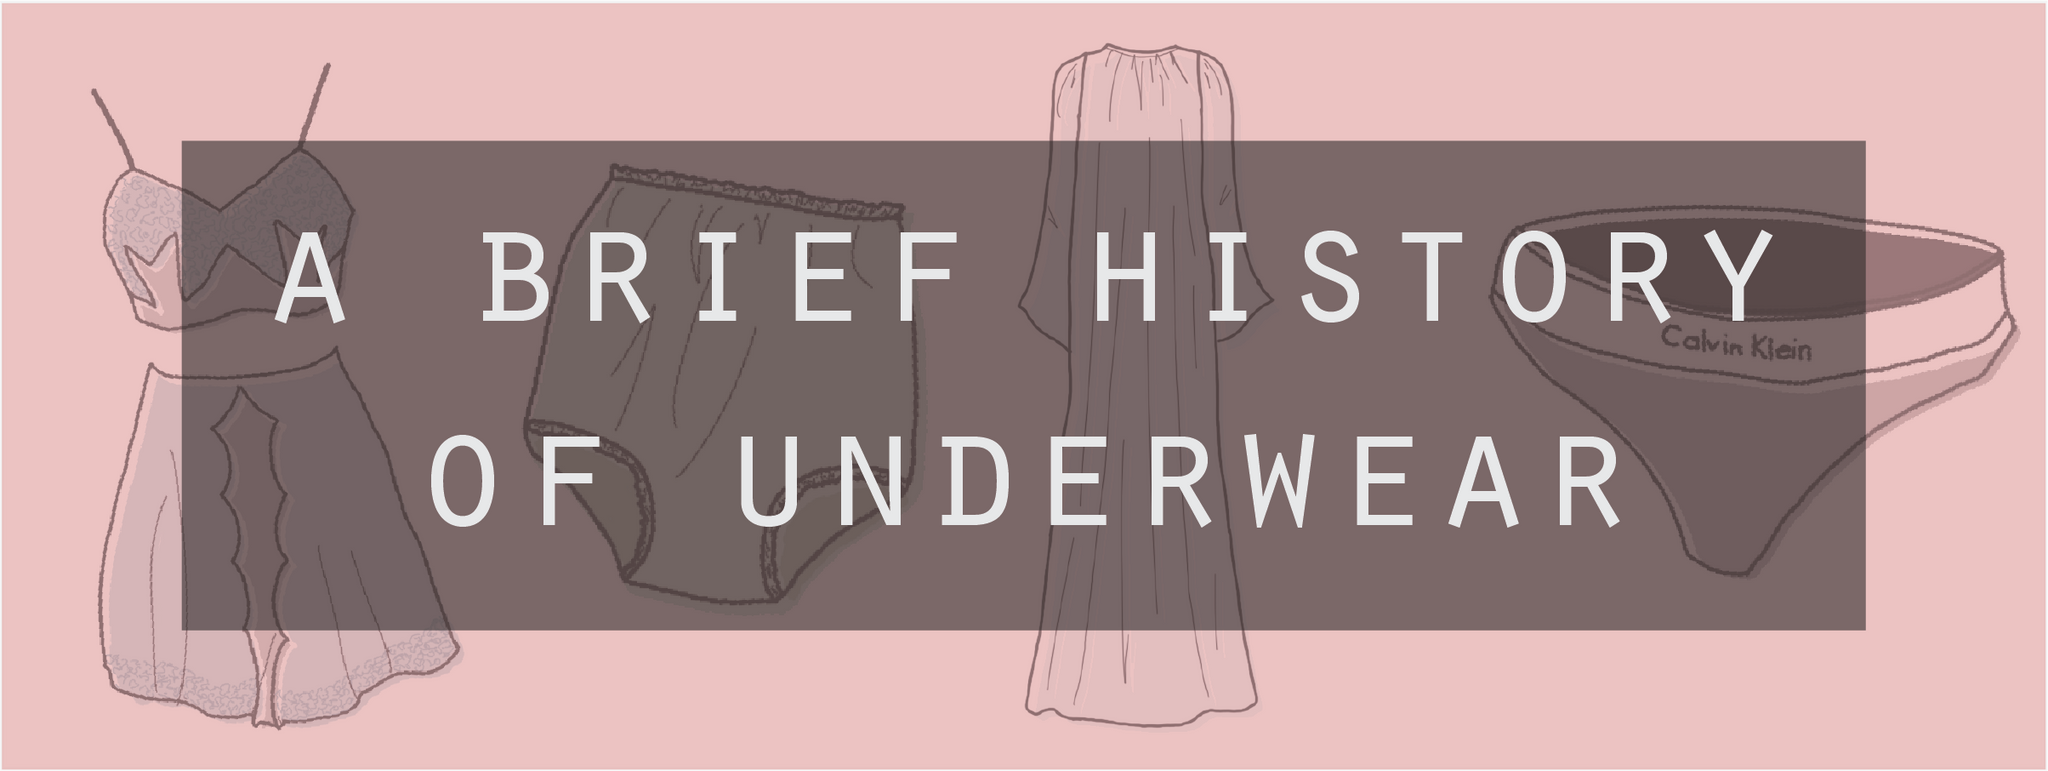 The History of Underwear, Worksheet